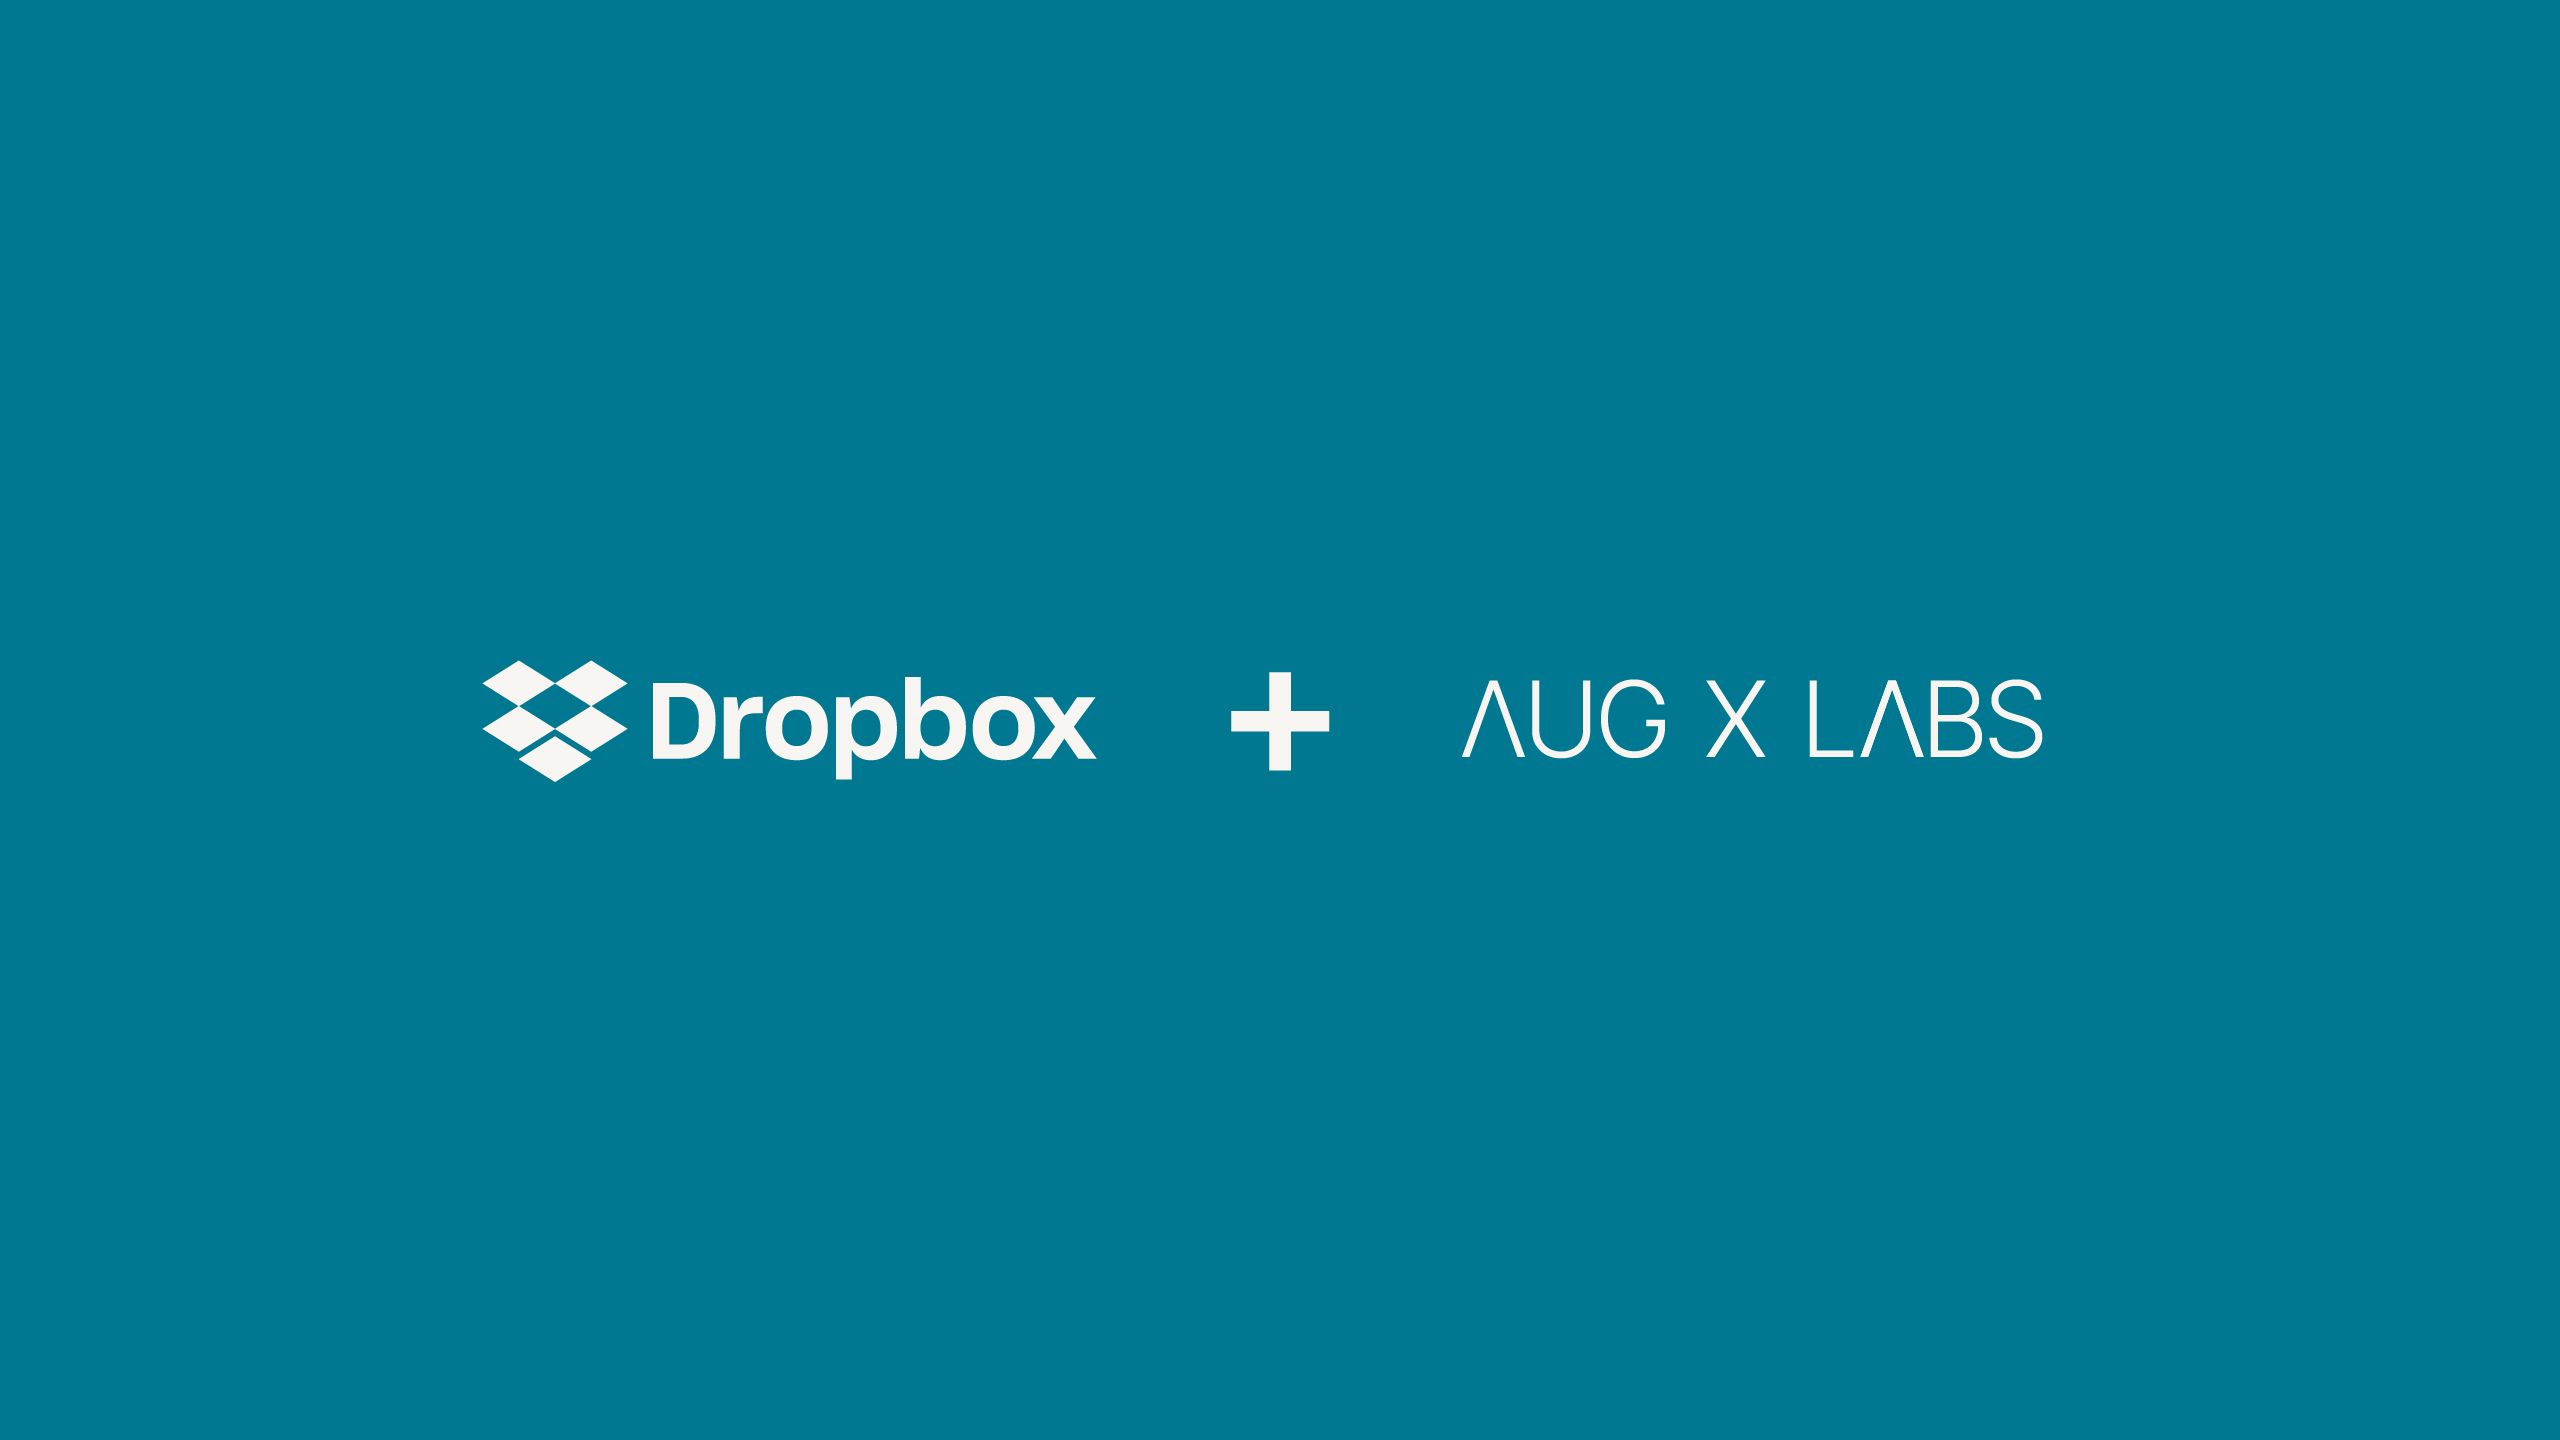 Dropbox와 Aug X Labs의 파트너십 로고  